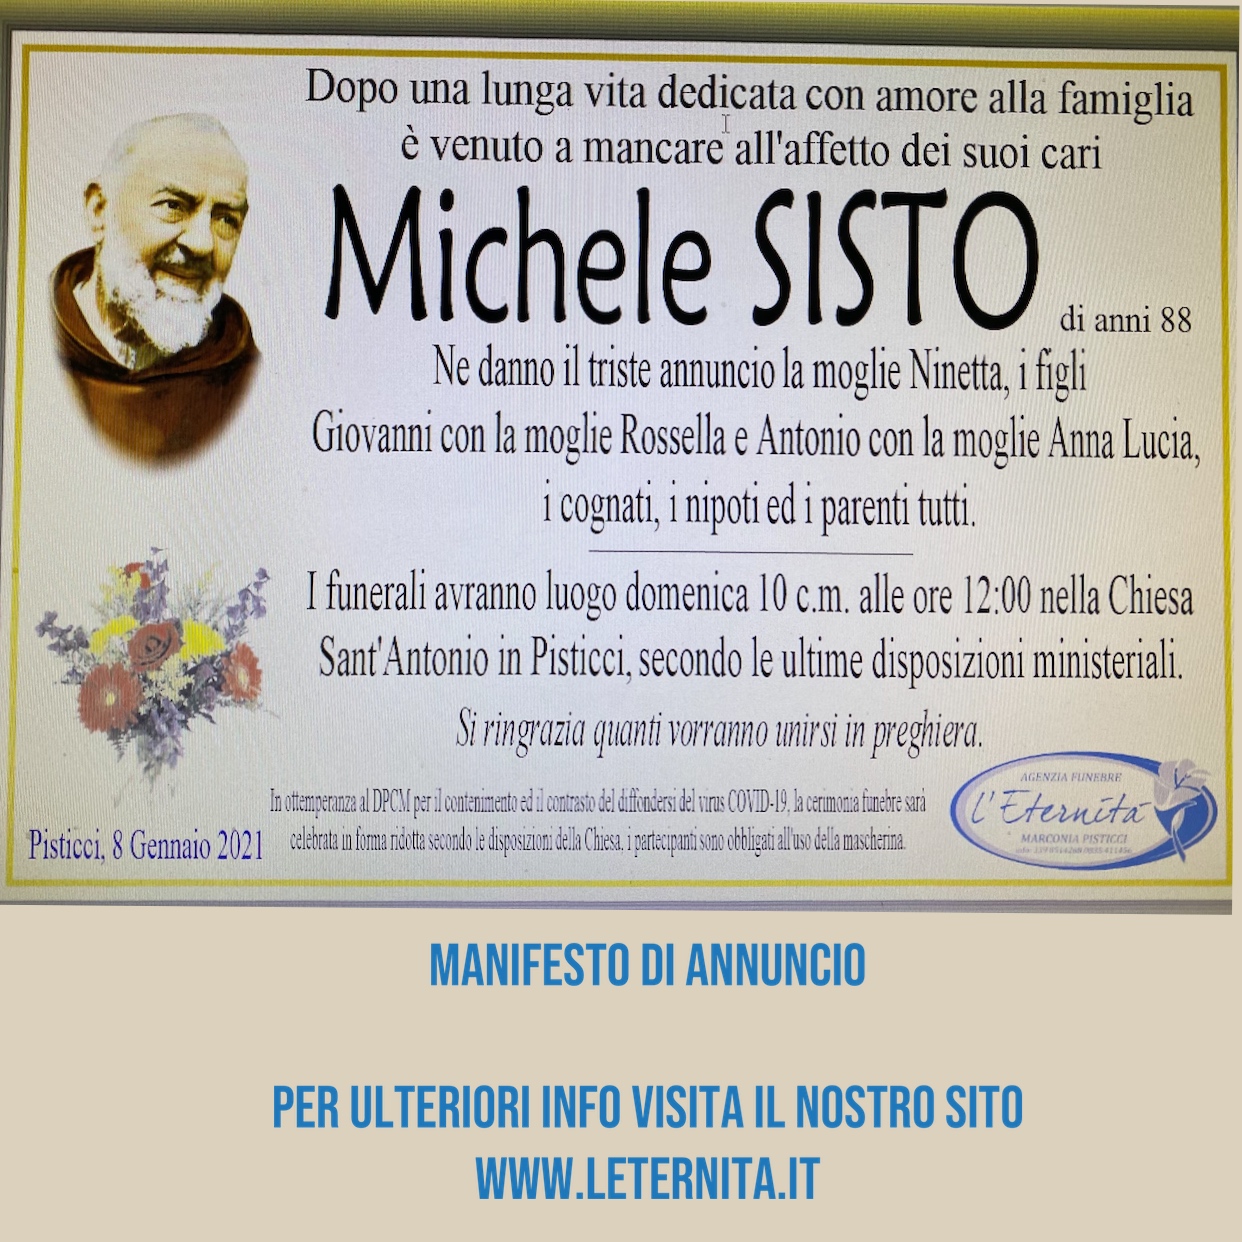 Michele SISTO